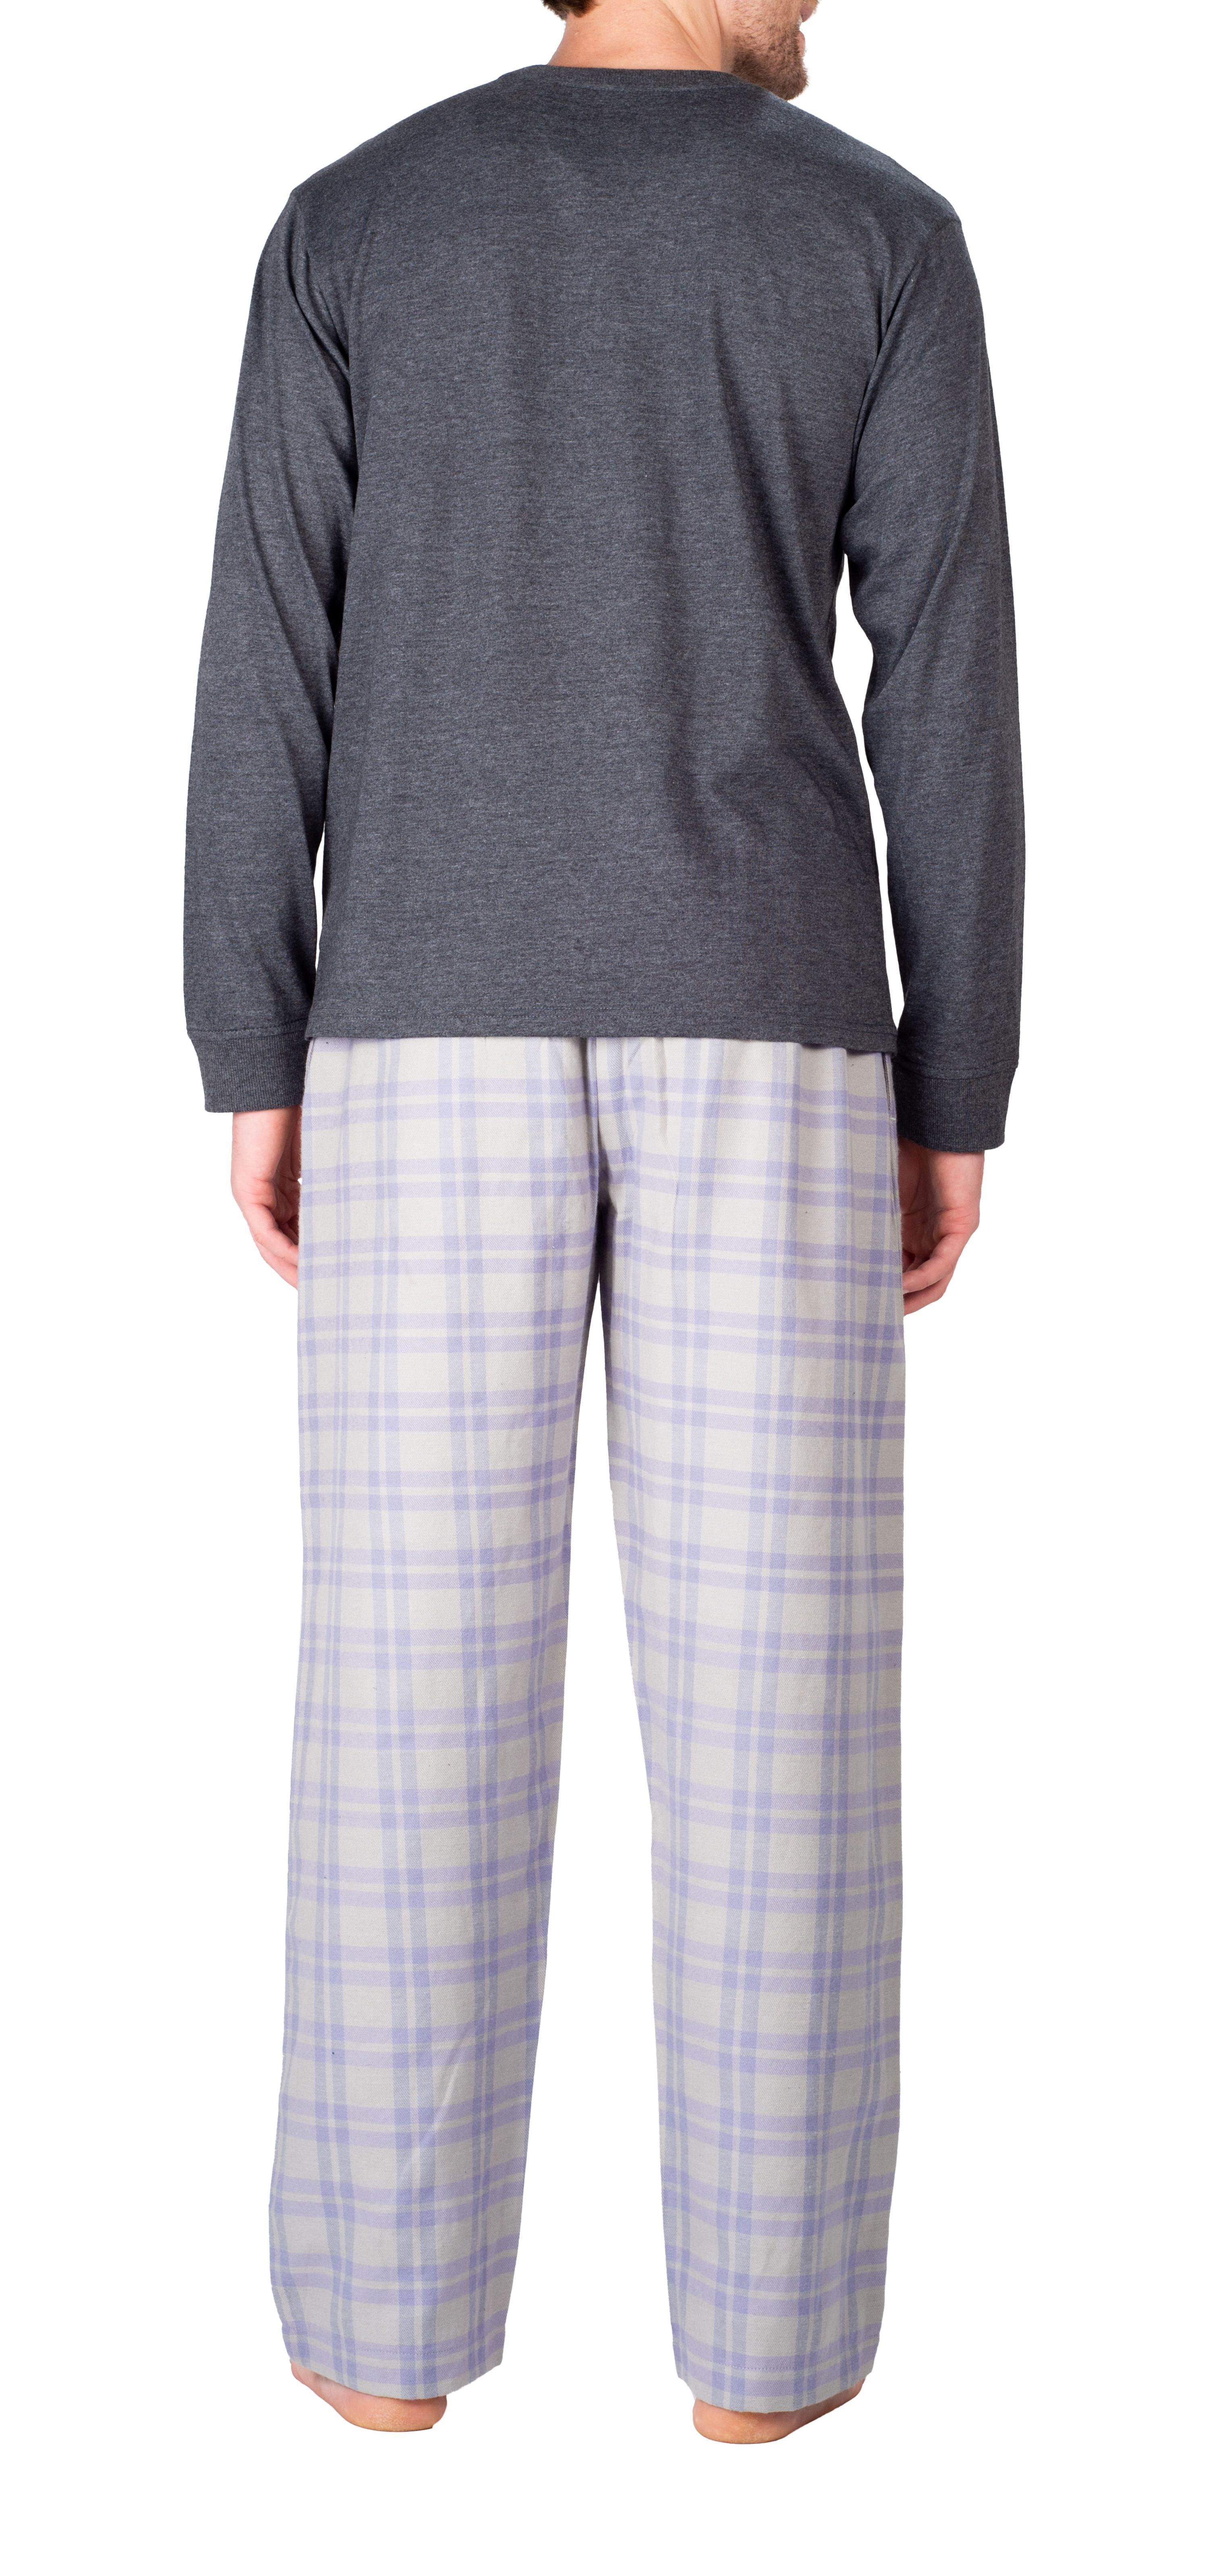 Waylen Pajama Set 1131476 Space Age/Grey